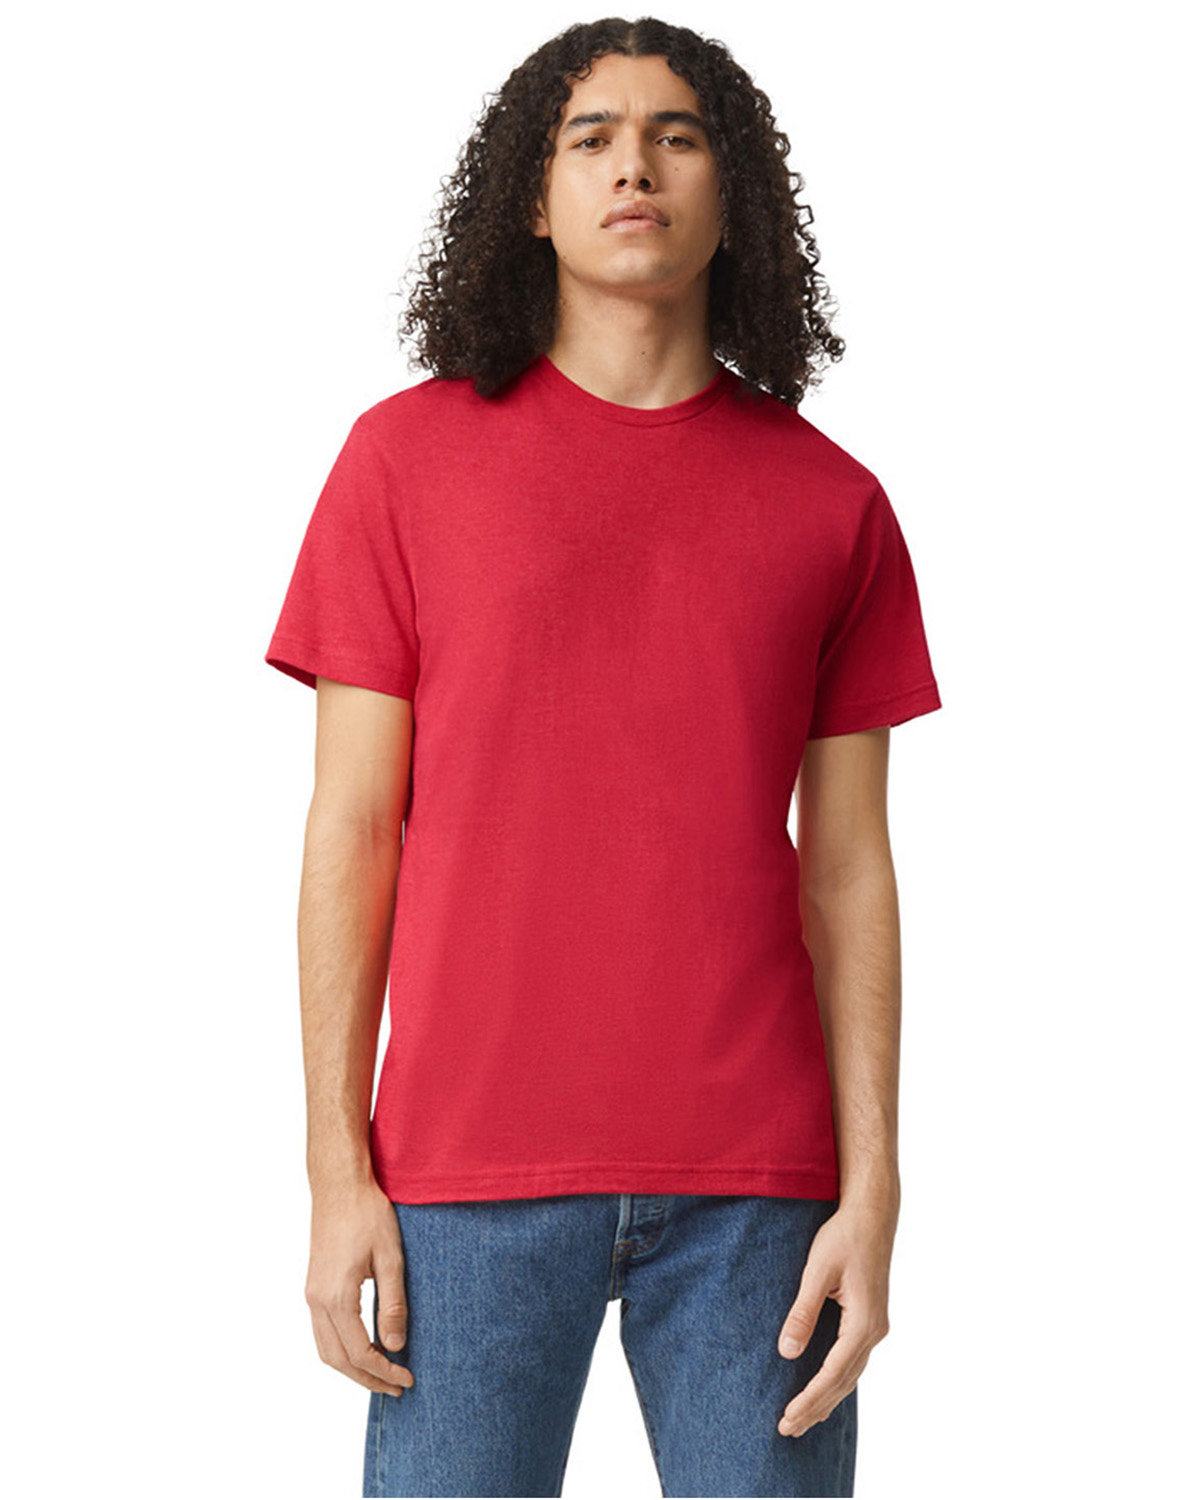 American Apparel Unisex CVC T-Shirt HEATHER RED 